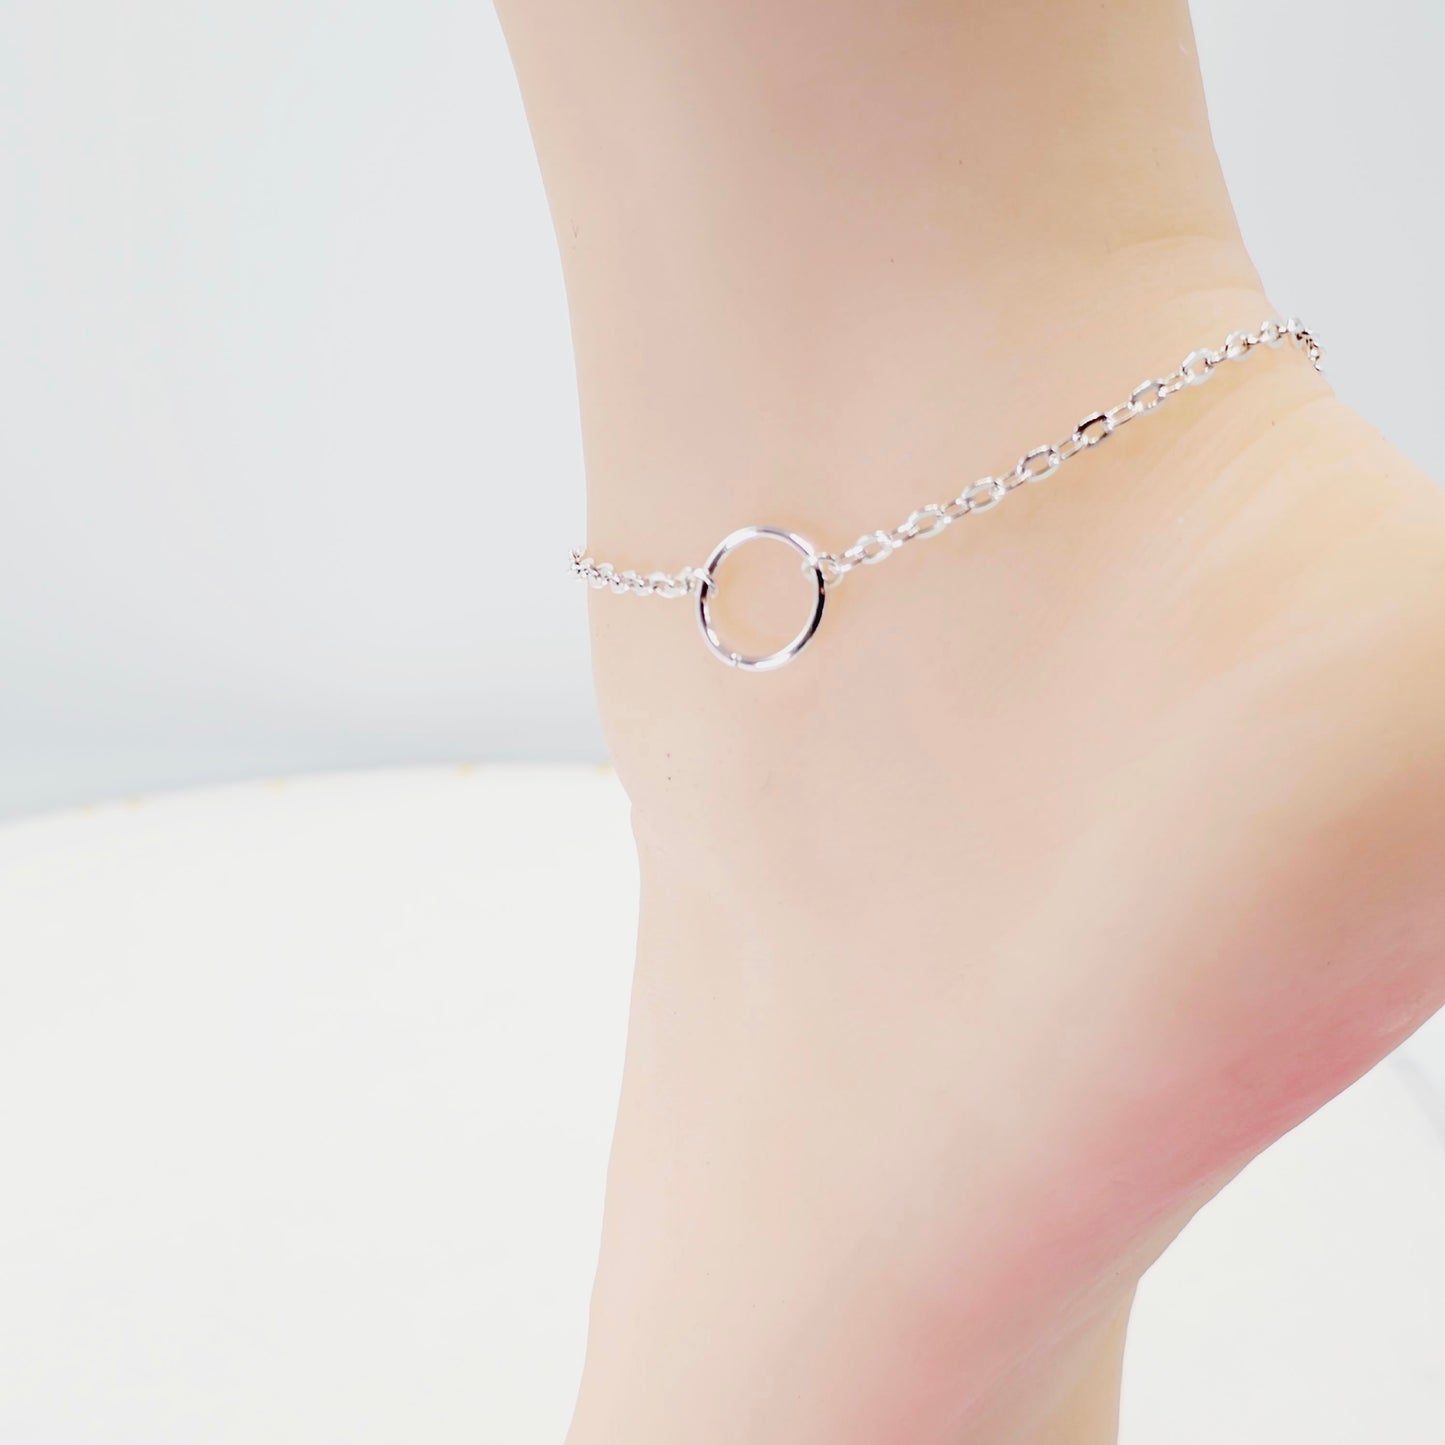 Eternity Ring Ankle Bracelet – Discreet Ankle Collar - Serenity in